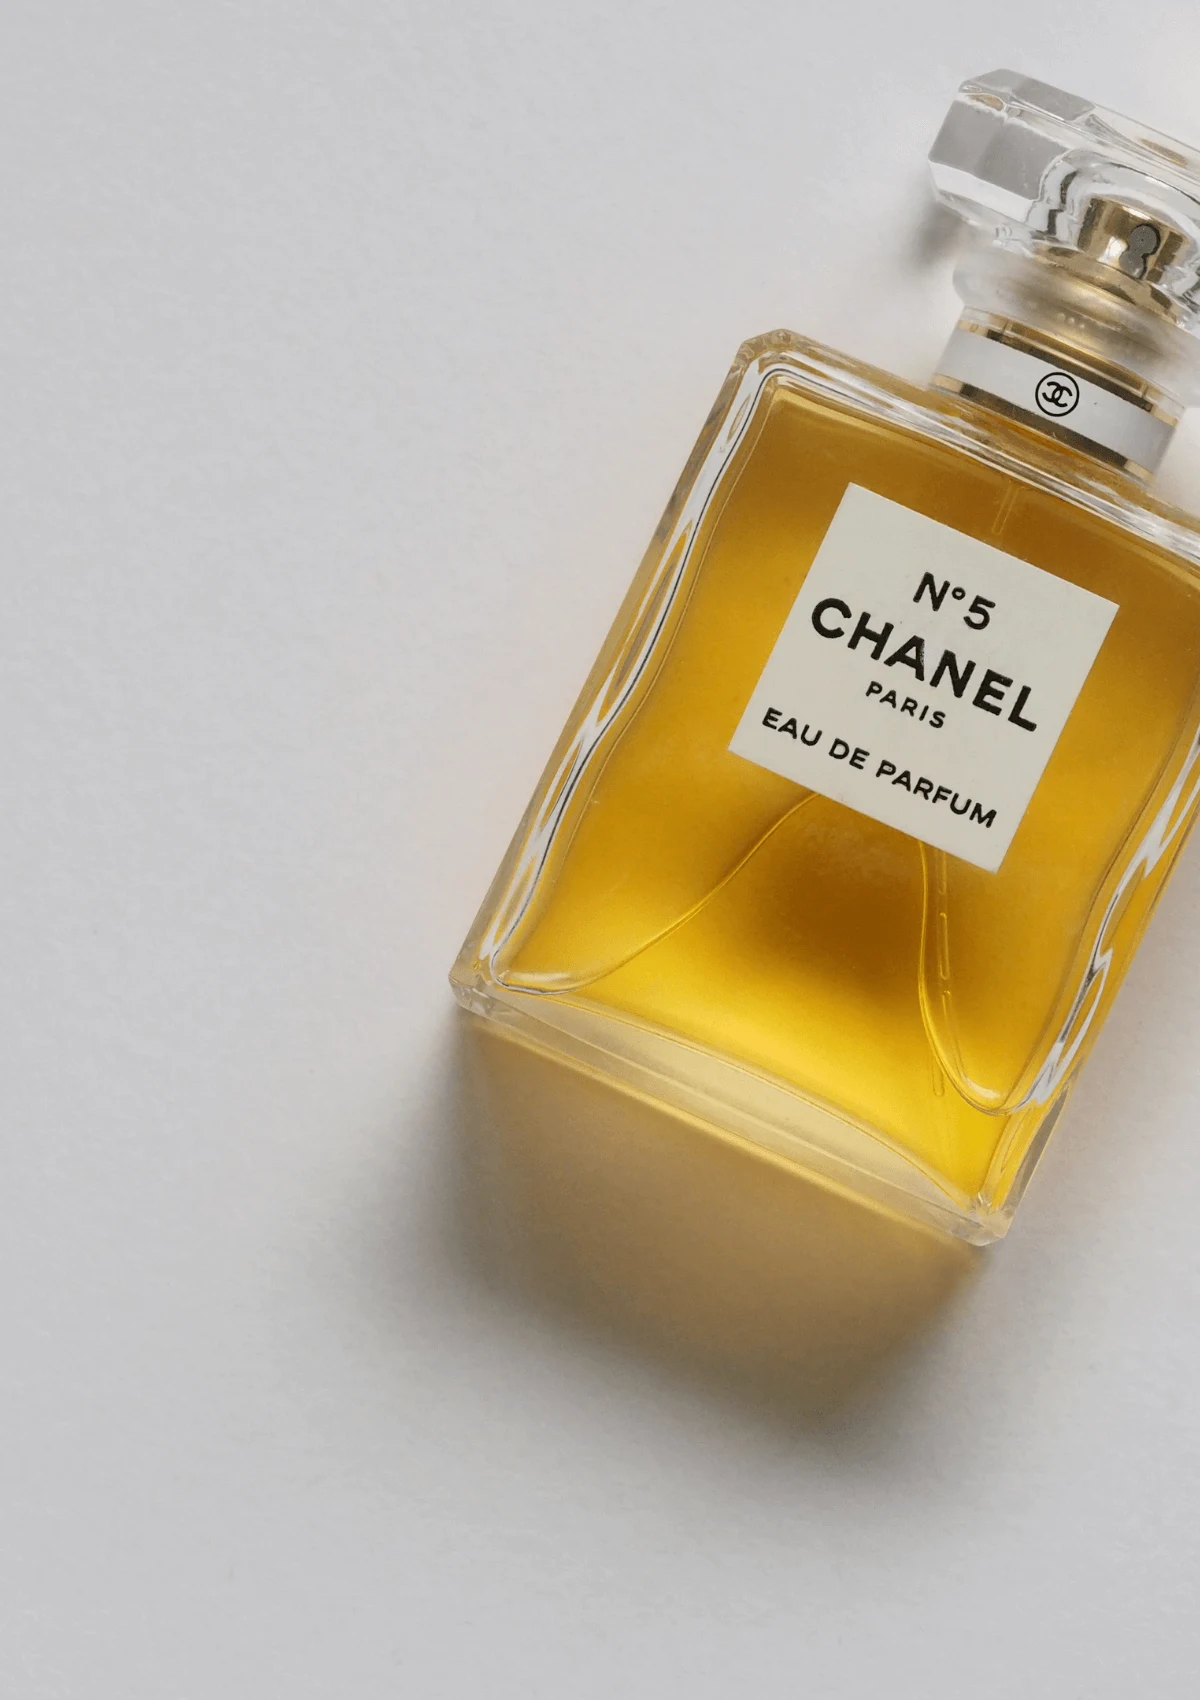 No 5 Chanel perfume